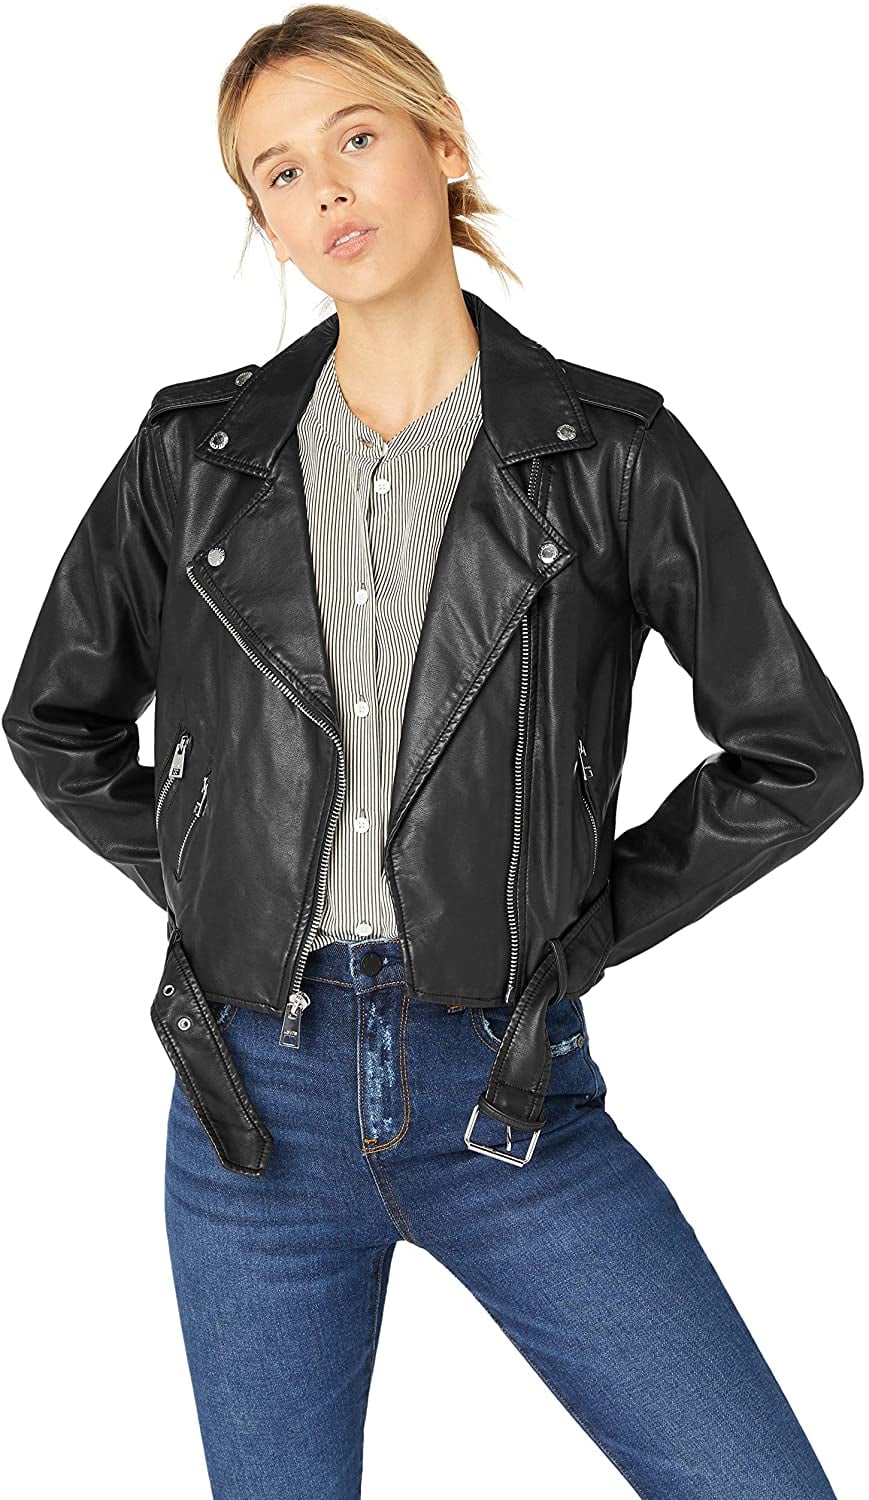 Levi's biker jacket discount 69% Black M WOMEN FASHION Jackets Biker jacket NO STYLE 